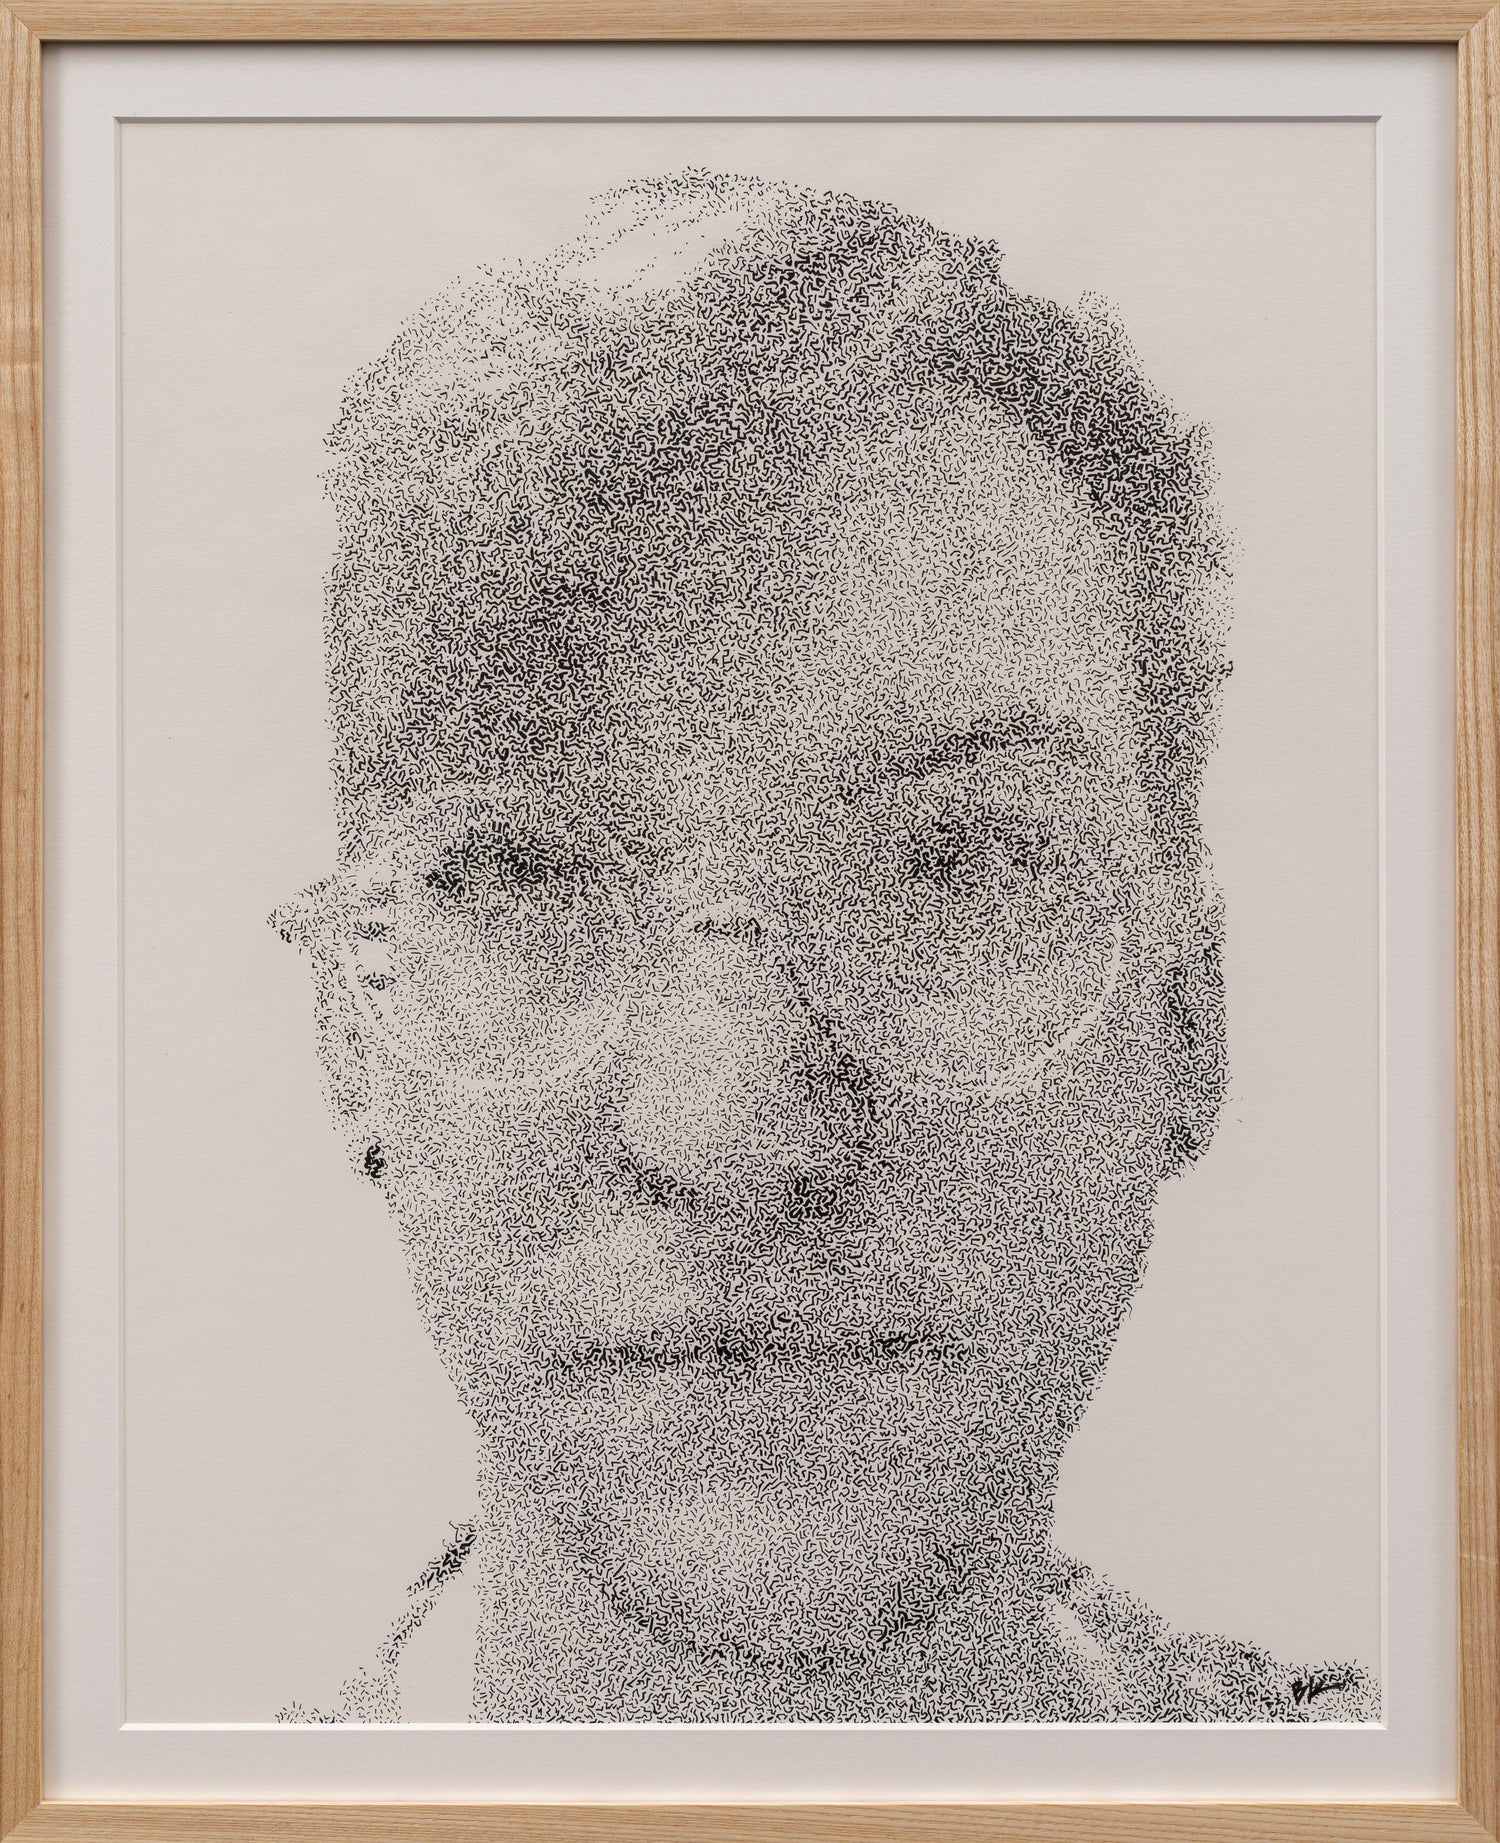 Algorithmic Self-Portrait